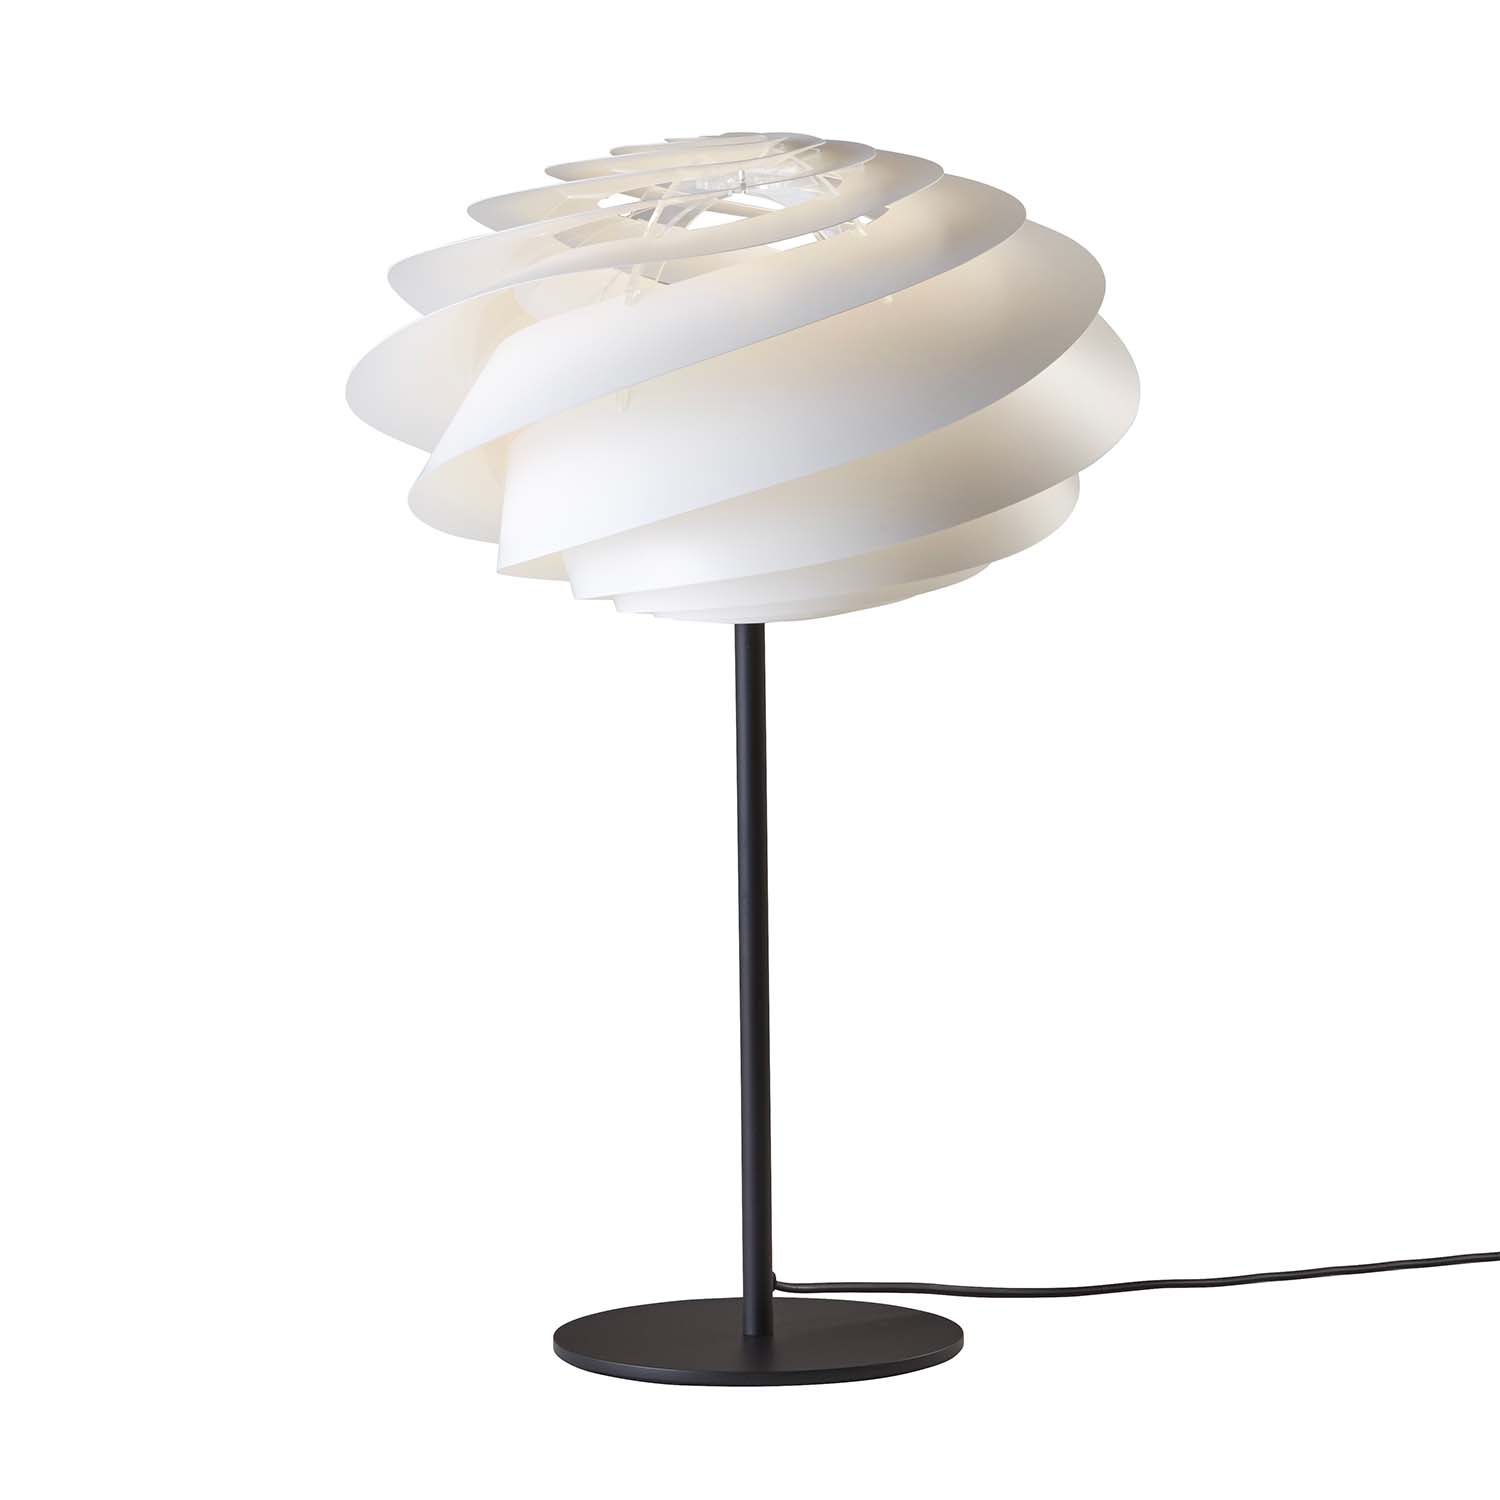 SWIRL Table - Lampe à poser spirale blanc et noir, création designer